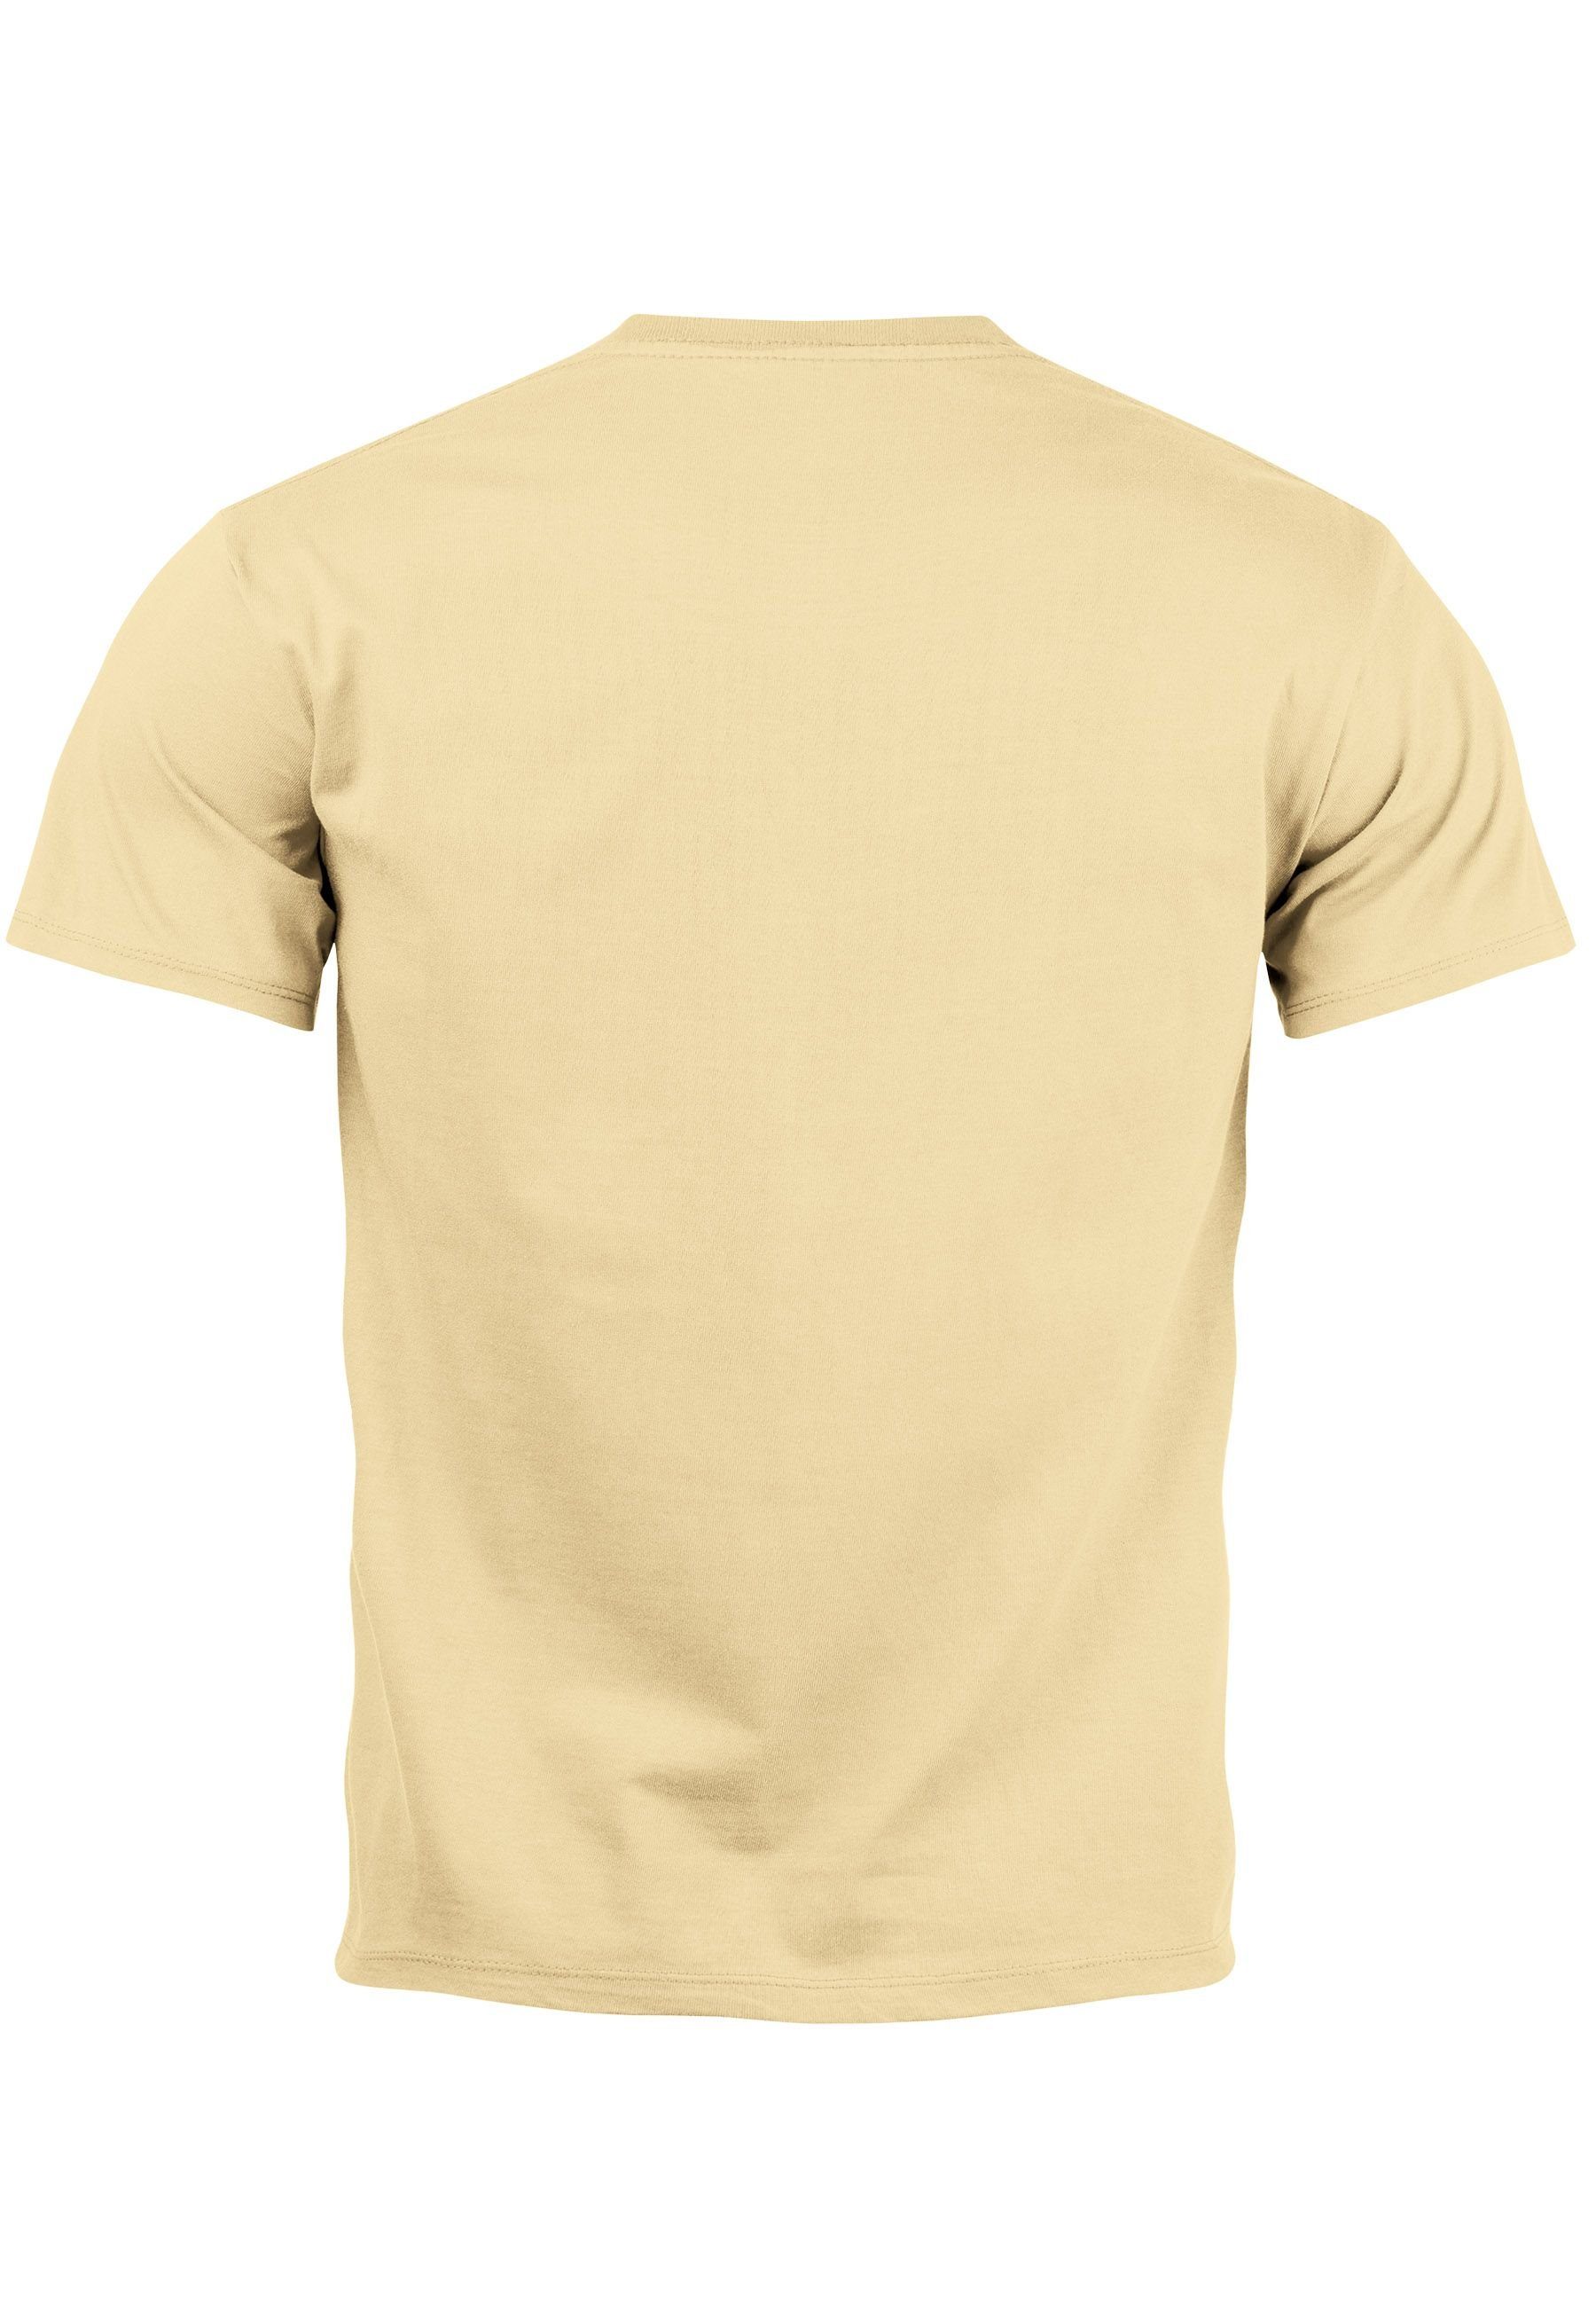 Polygon Print Bear Design Outdoor Herren Fashion T-Shirt Print-Shirt 1 Neverless Print Tiermotiv mit natur Bär Polygon